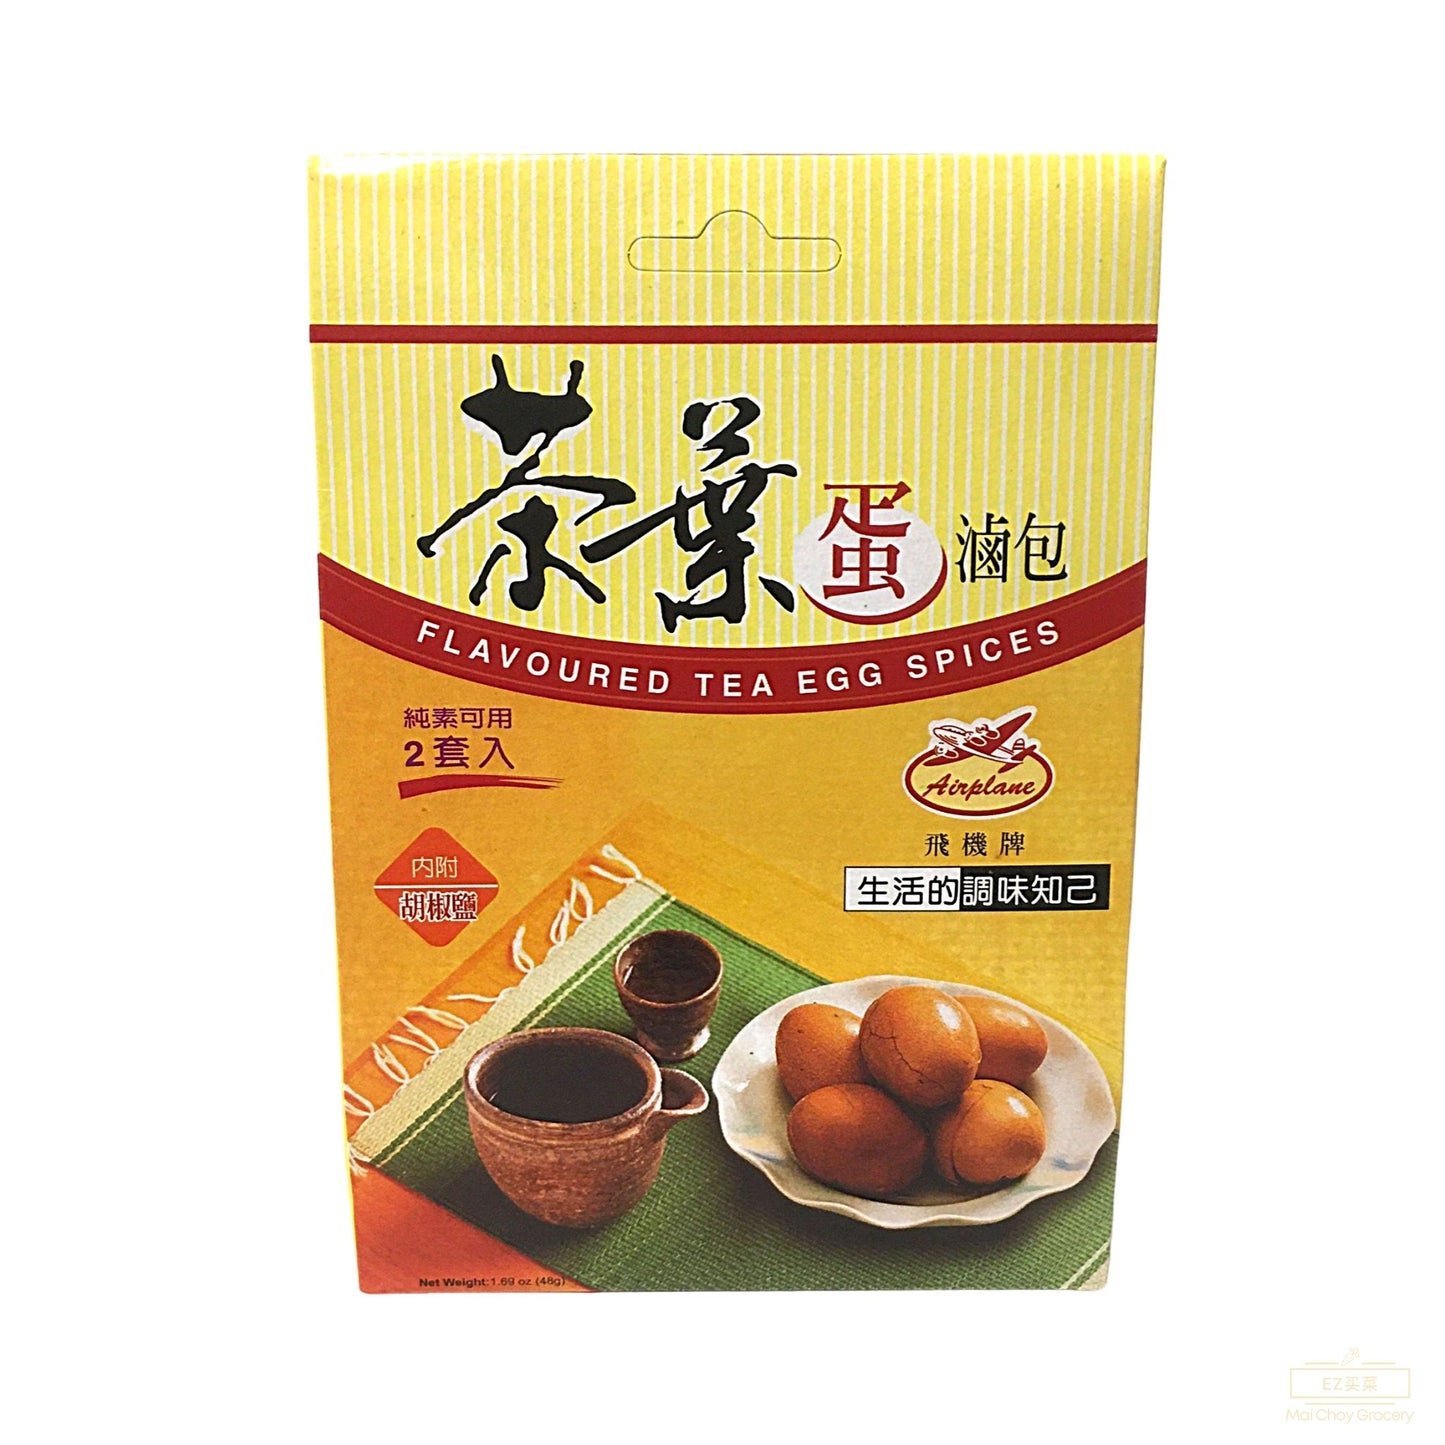 Flavored Tea Egg Spices 茶叶蛋卤包（2 包入）